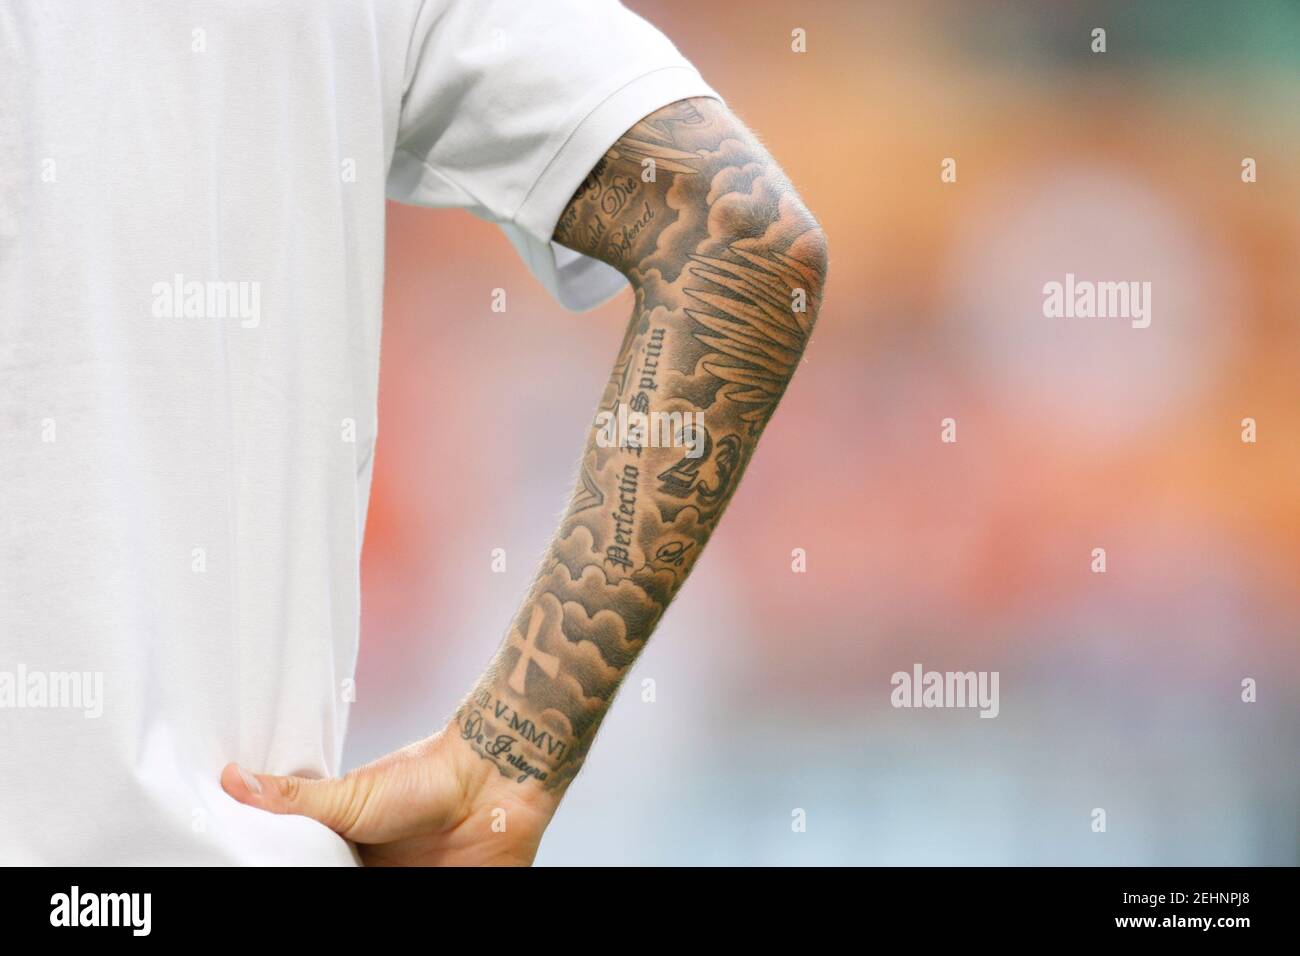 David Beckham Tattoo Immagini e Fotos Stock - Alamy